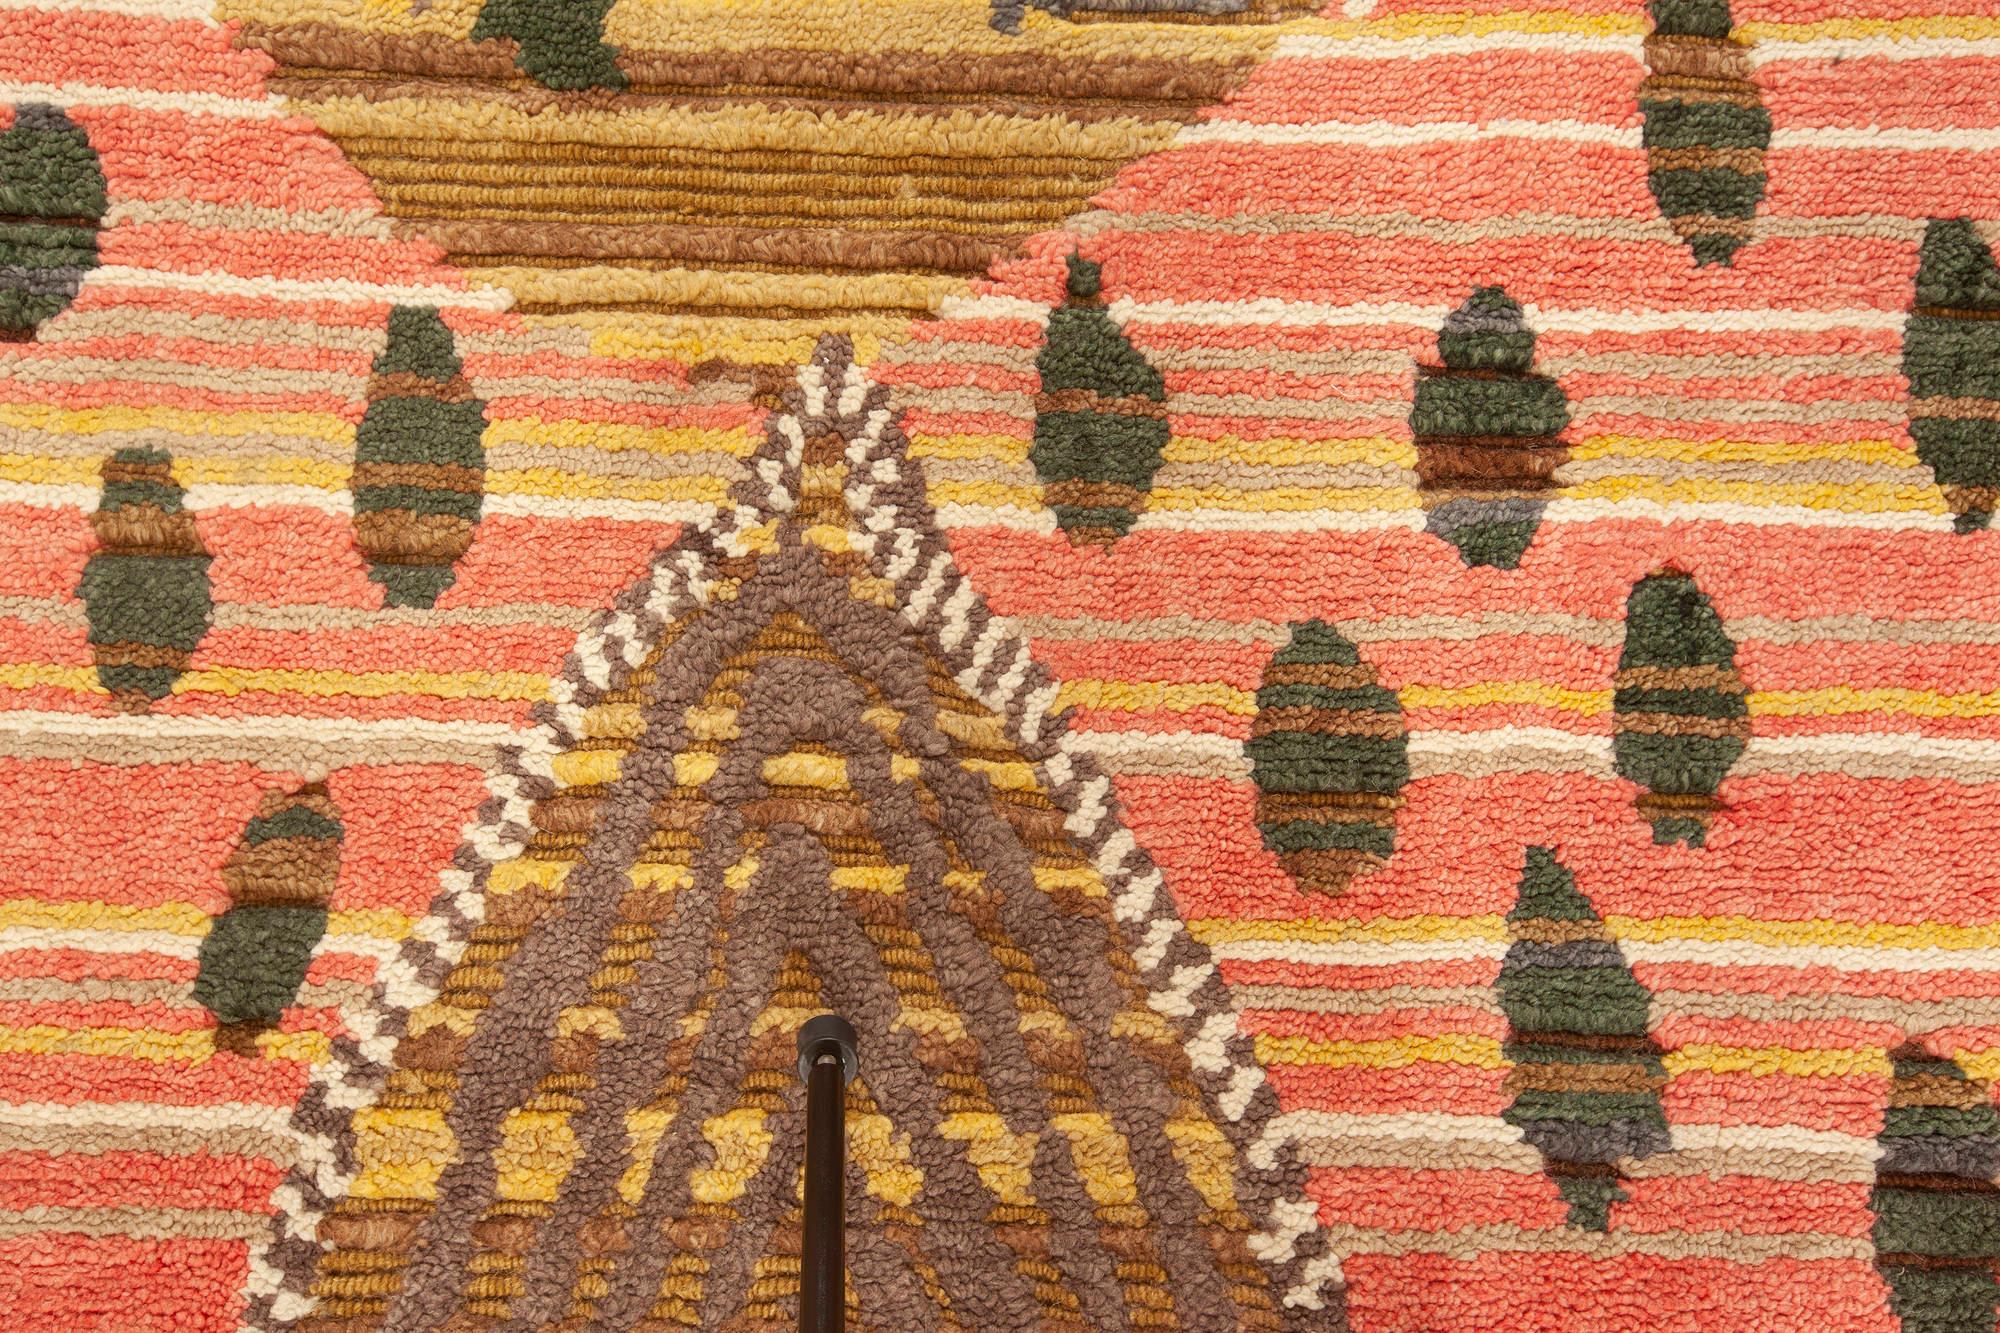 Contemporary Patchwork rug by Doris Leslie Blau
Size: 12'0